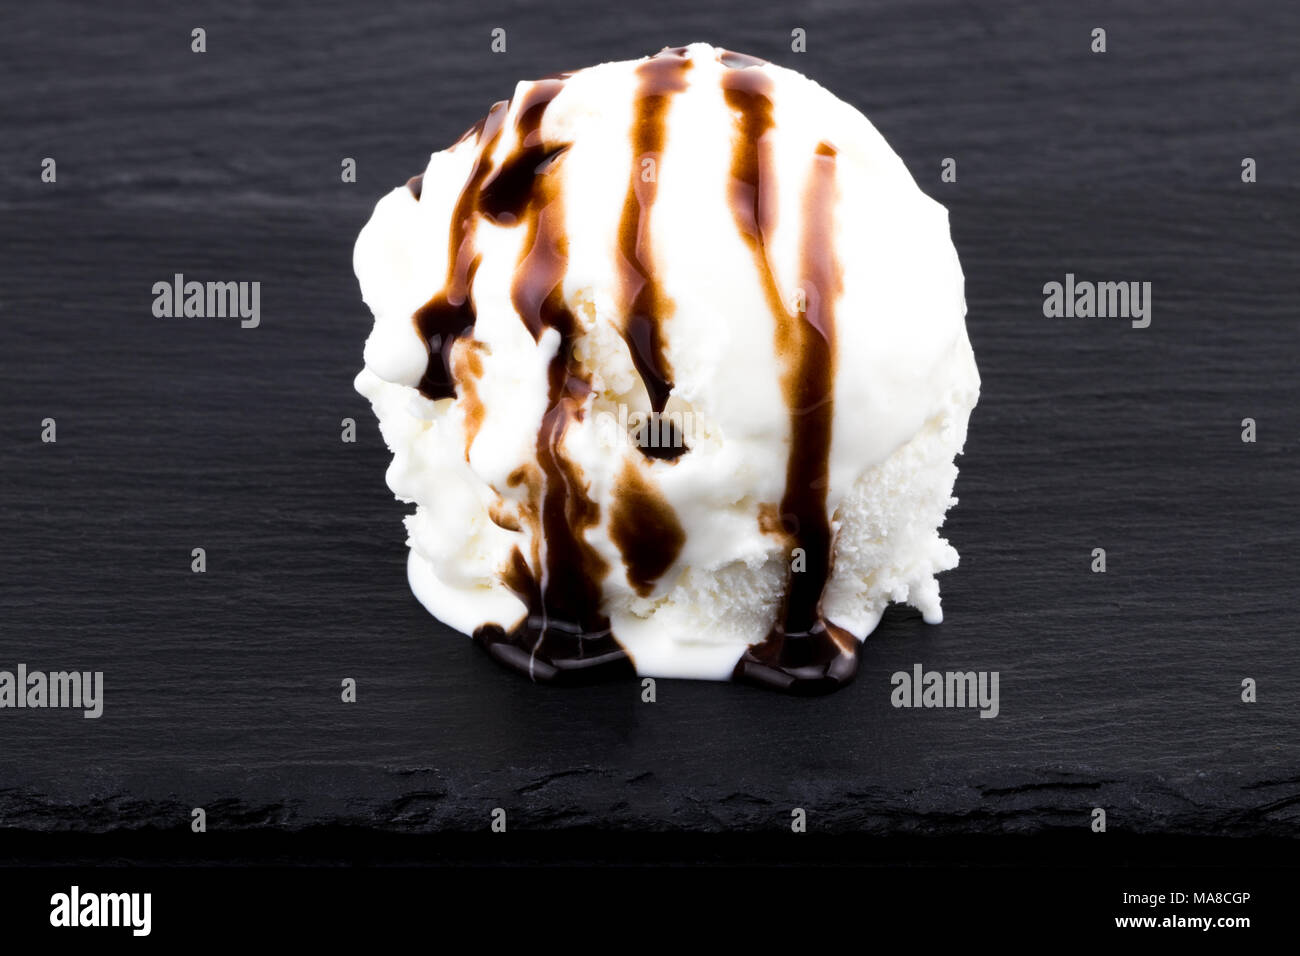 https://c8.alamy.com/comp/MA8CGP/ice-cream-balls-with-chocolate-sauce-on-black-background-top-view-MA8CGP.jpg